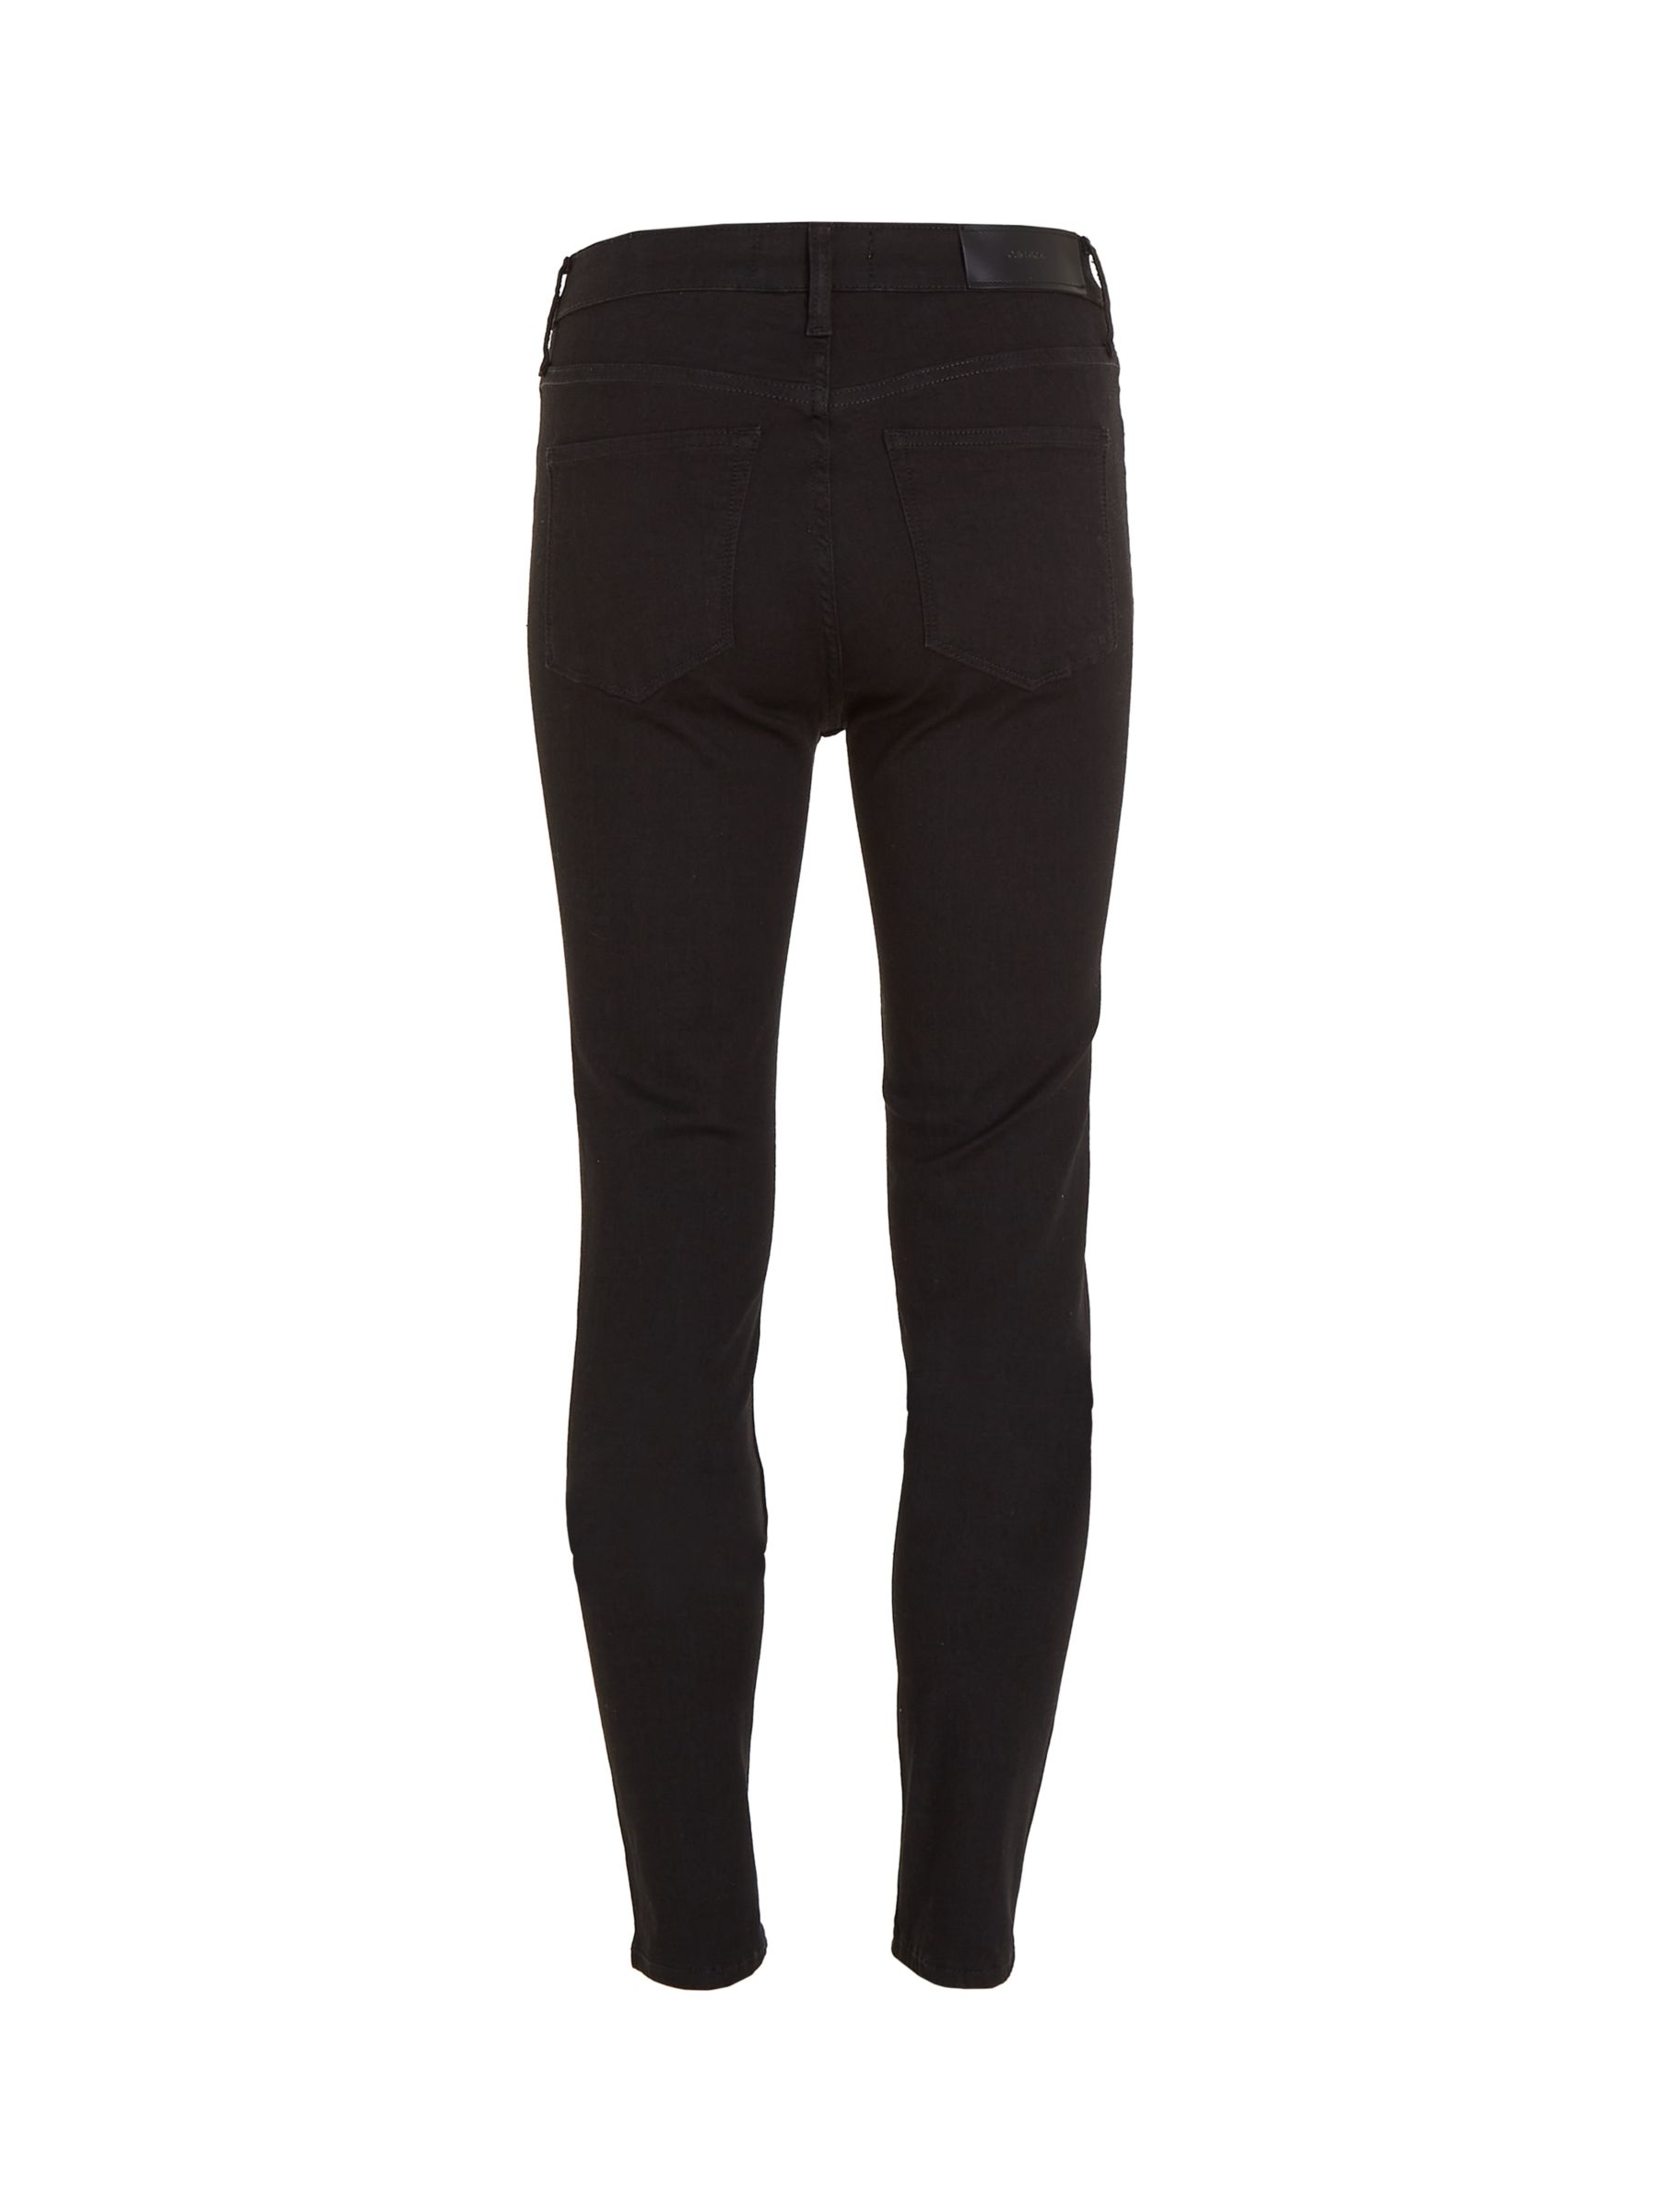 Calvin Klein High Waist Skinny Jeans, Denim Black, 25R